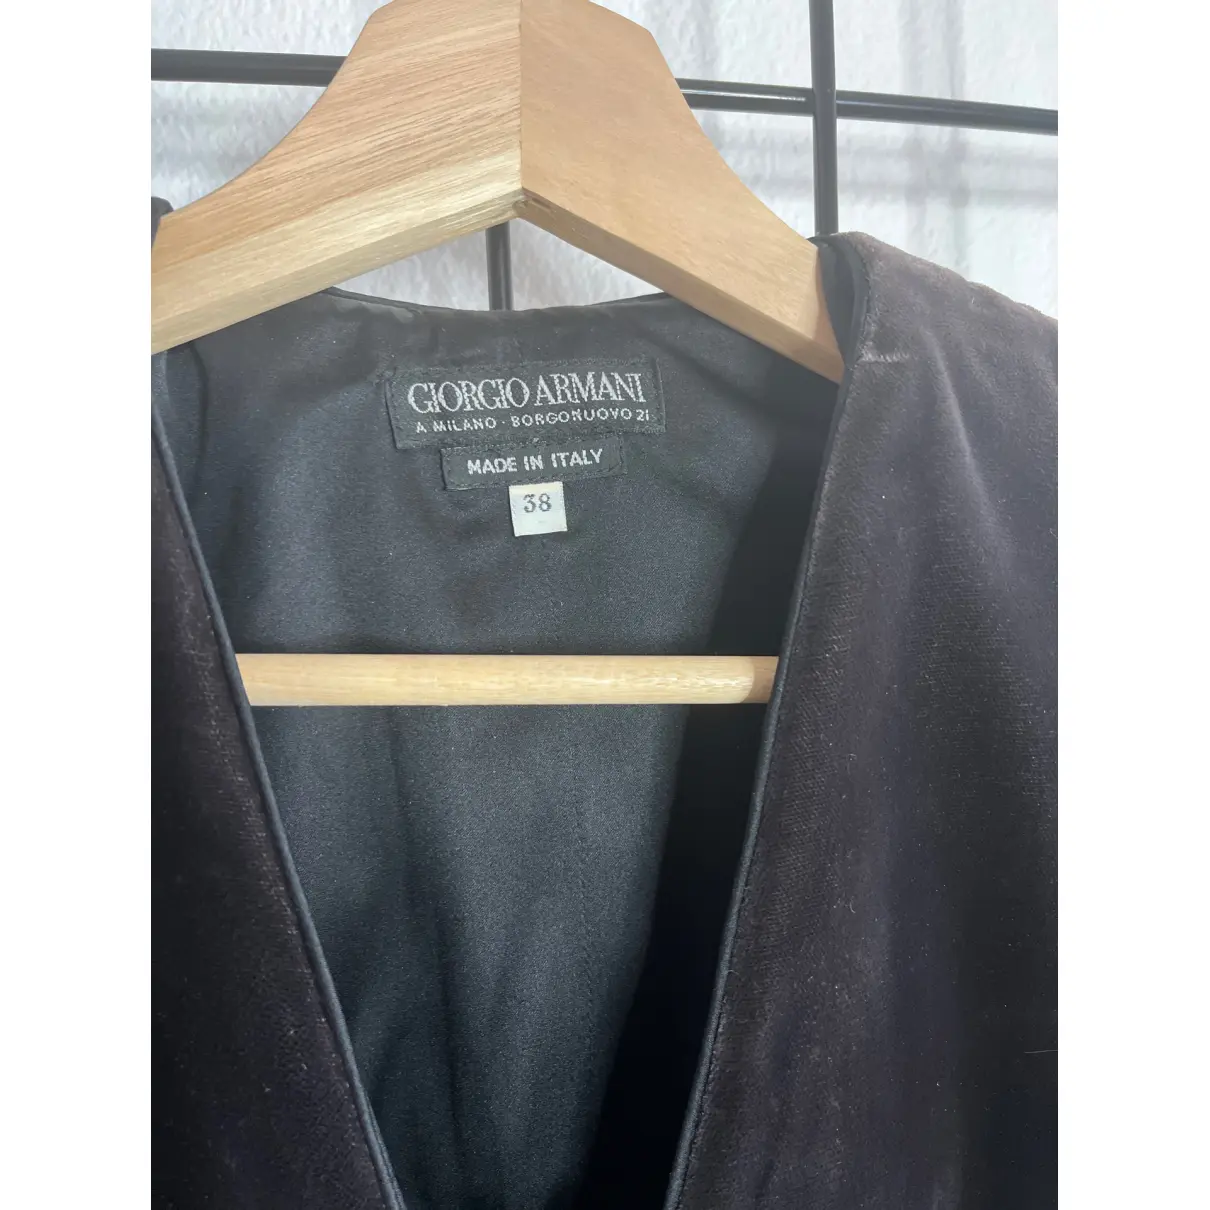 Buy Giorgio Armani Velvet blazer online